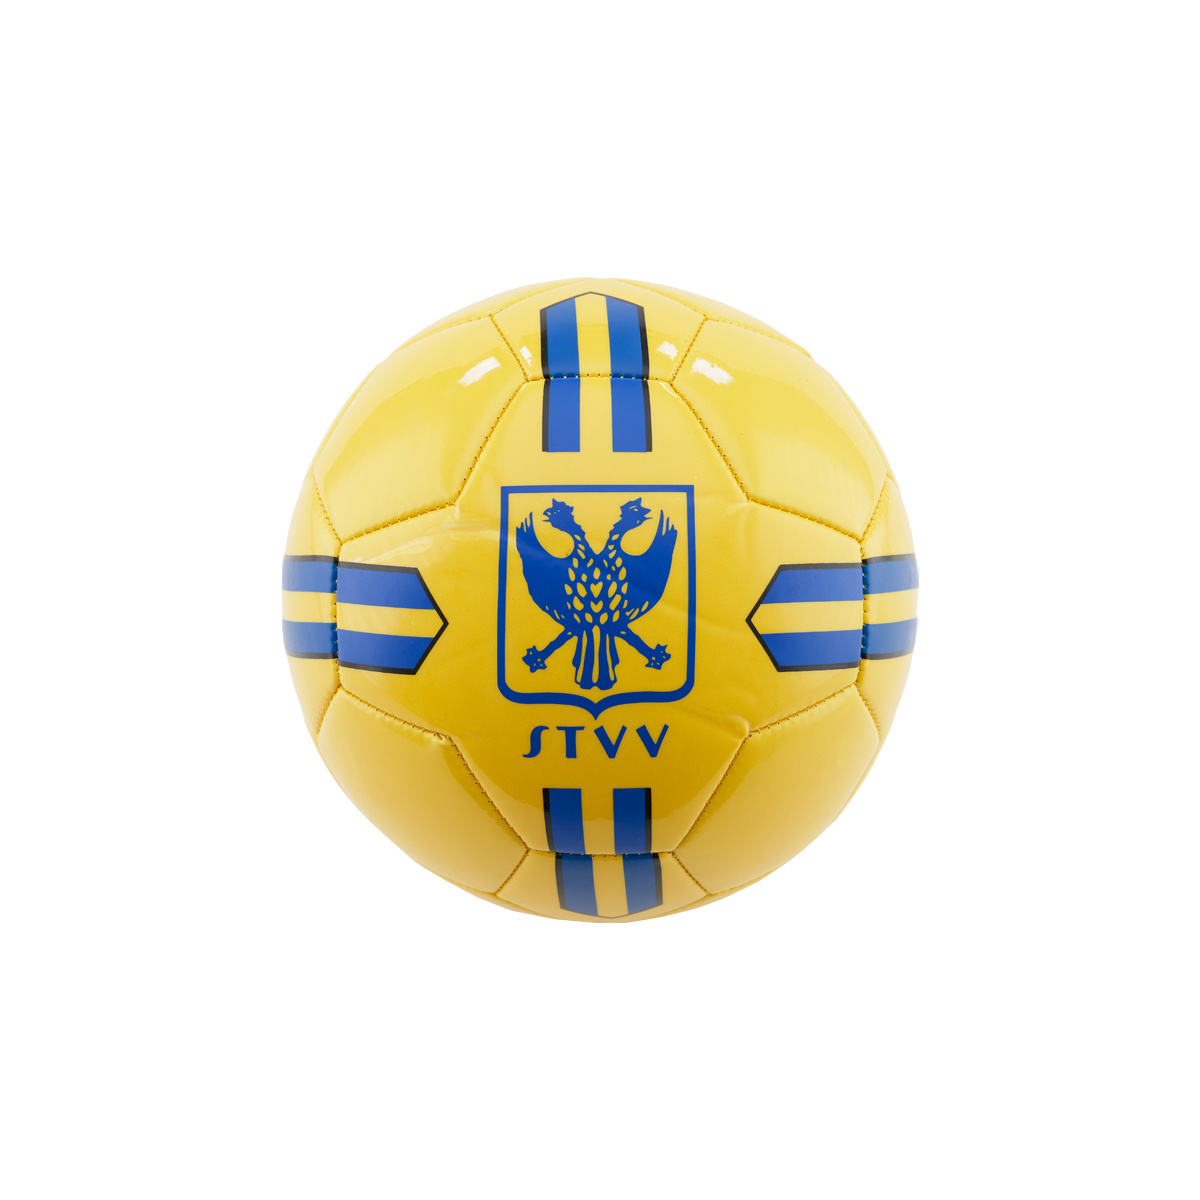 Topfanz Ballon de foot 5 STVV logo jaune